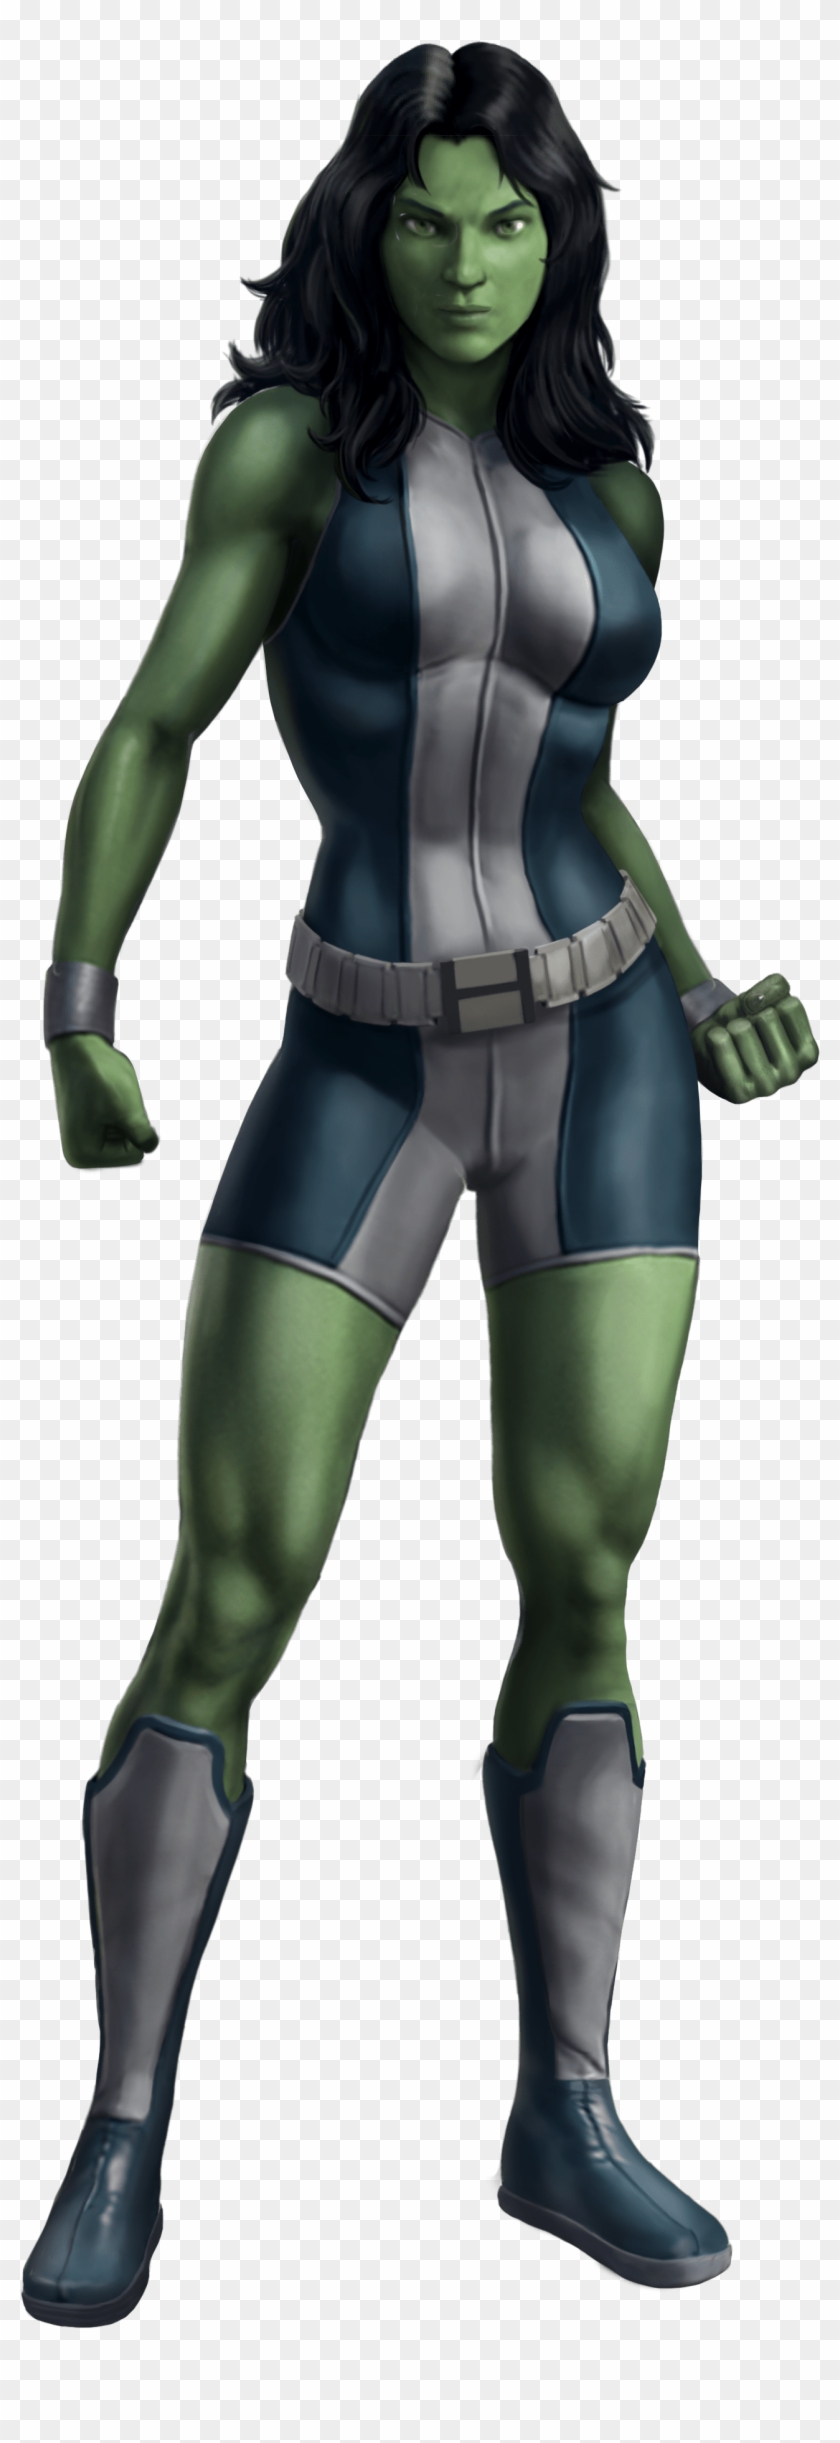 Shehulk, Hulk, Superhero, Fictional Character Png Image - Figurine Clipart #4579583